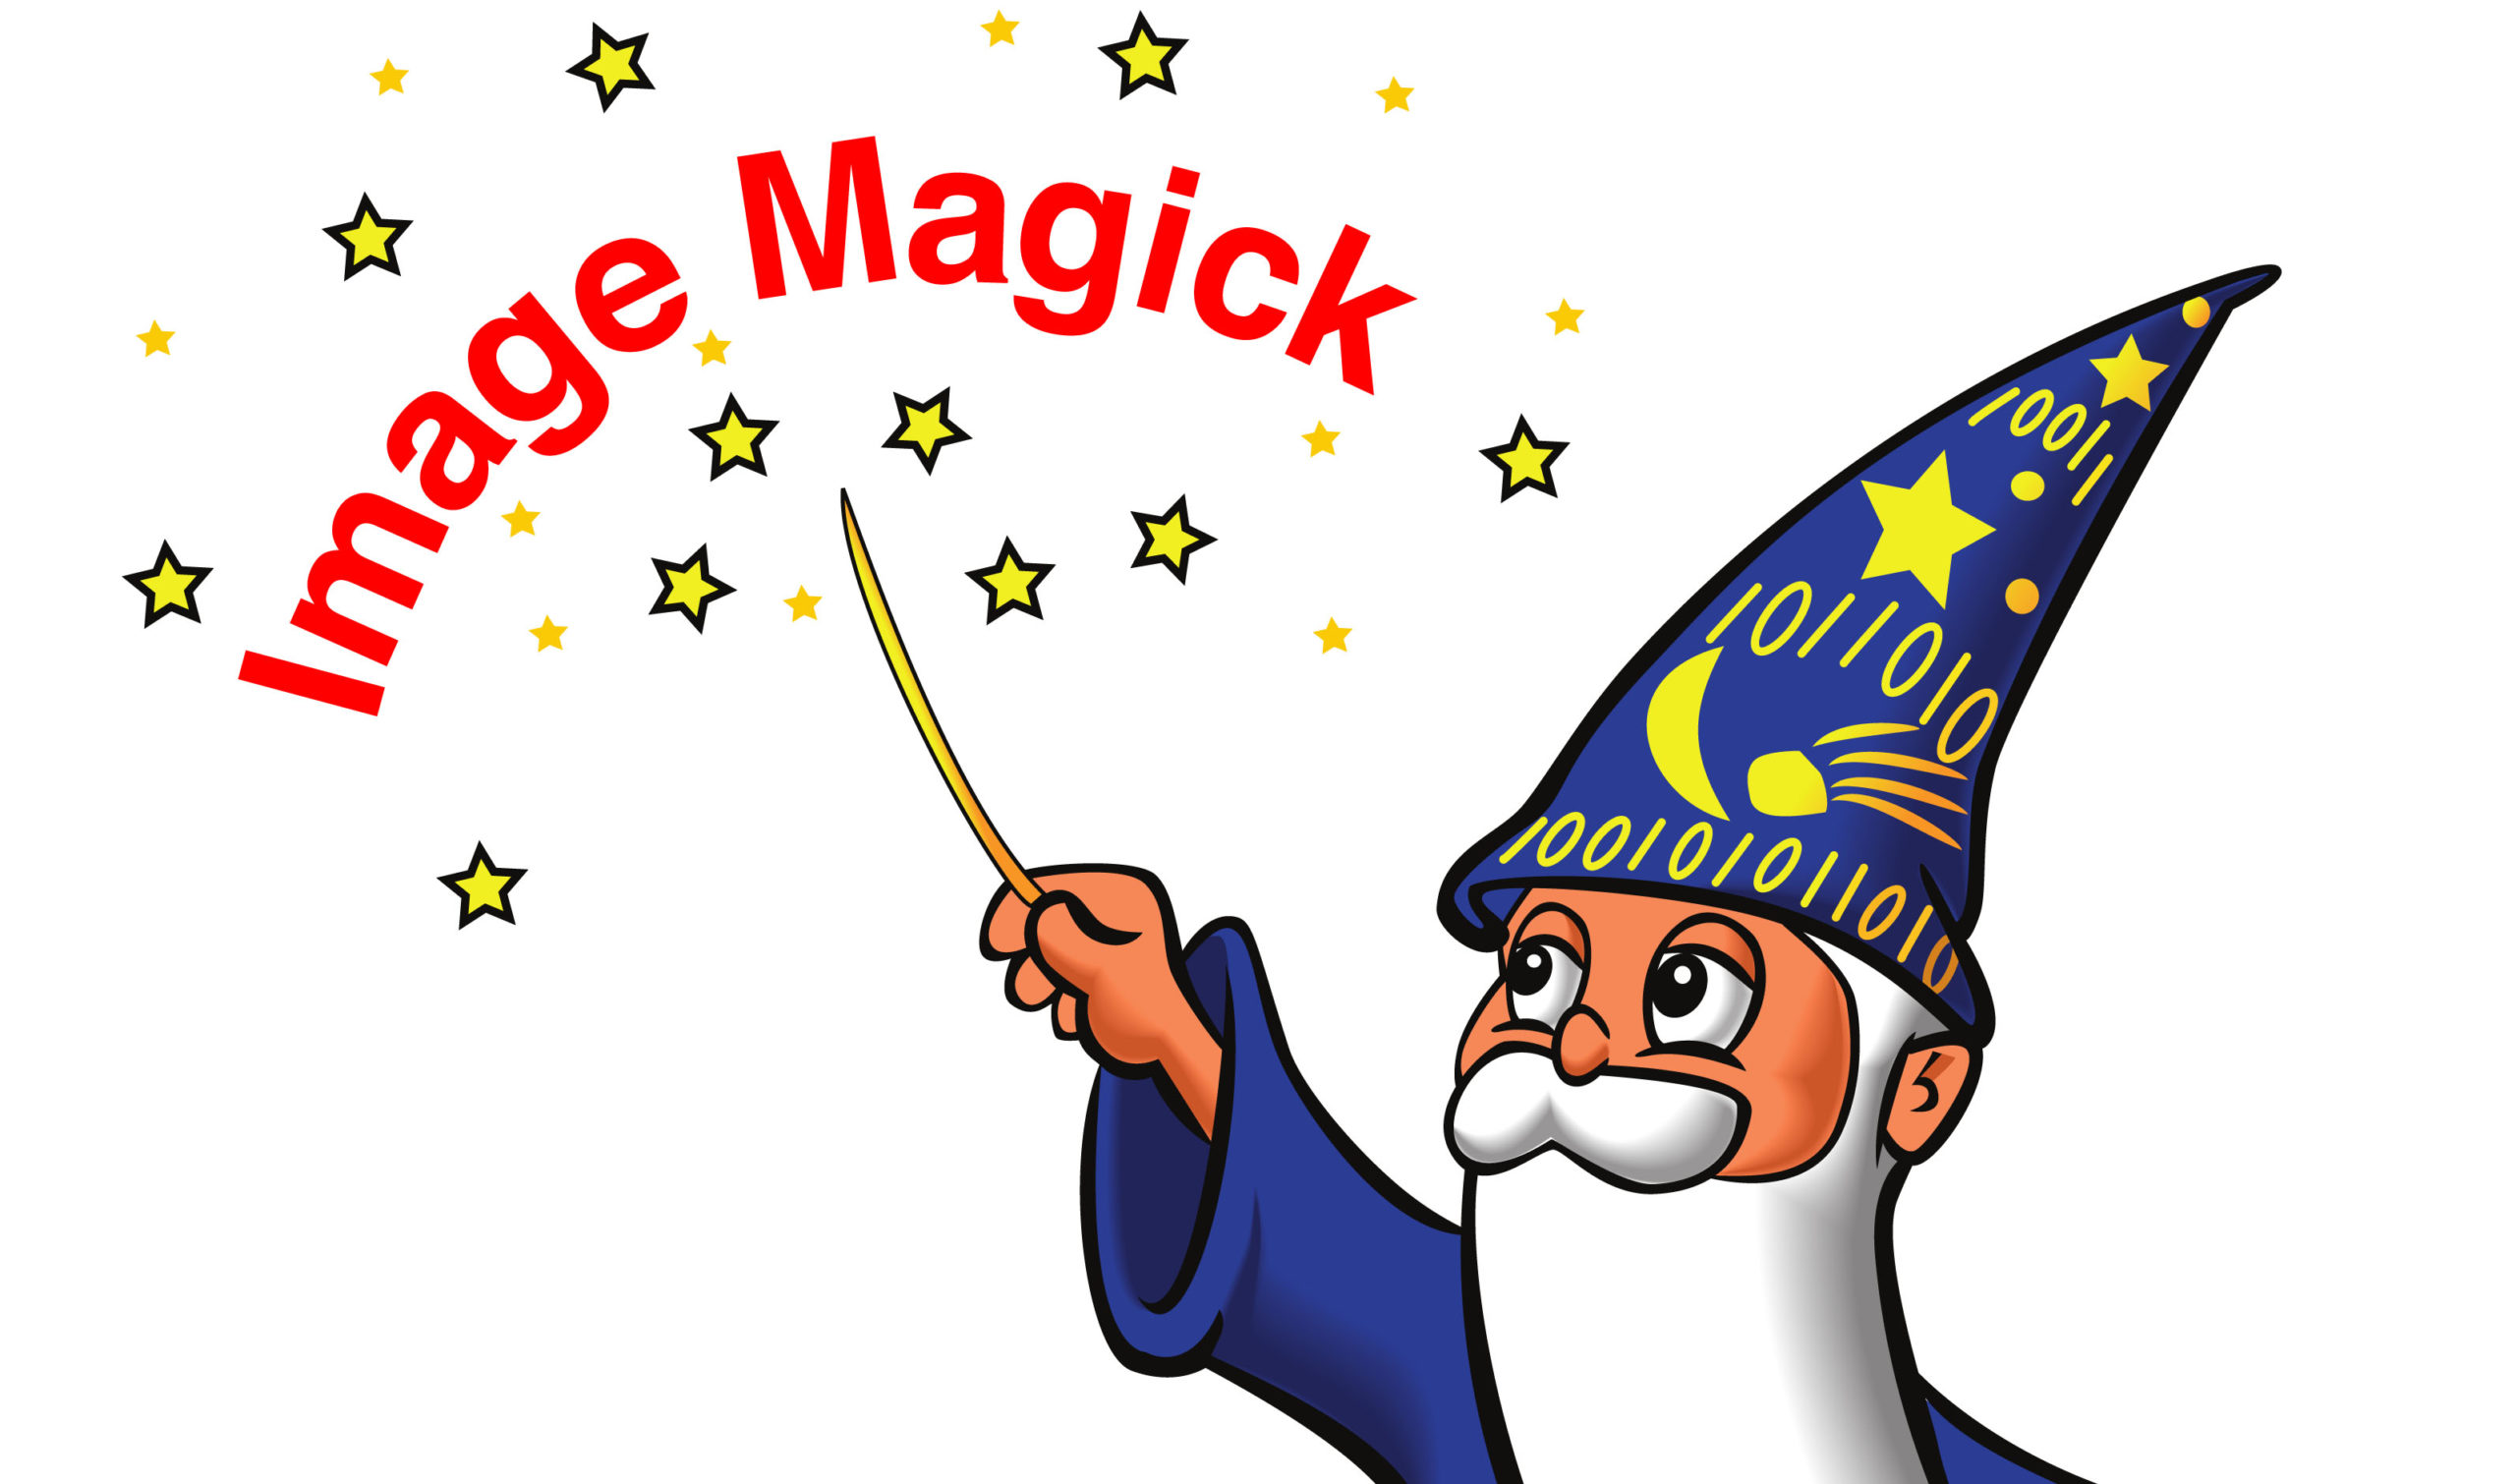 Banner of image magick logo: the magick wizard